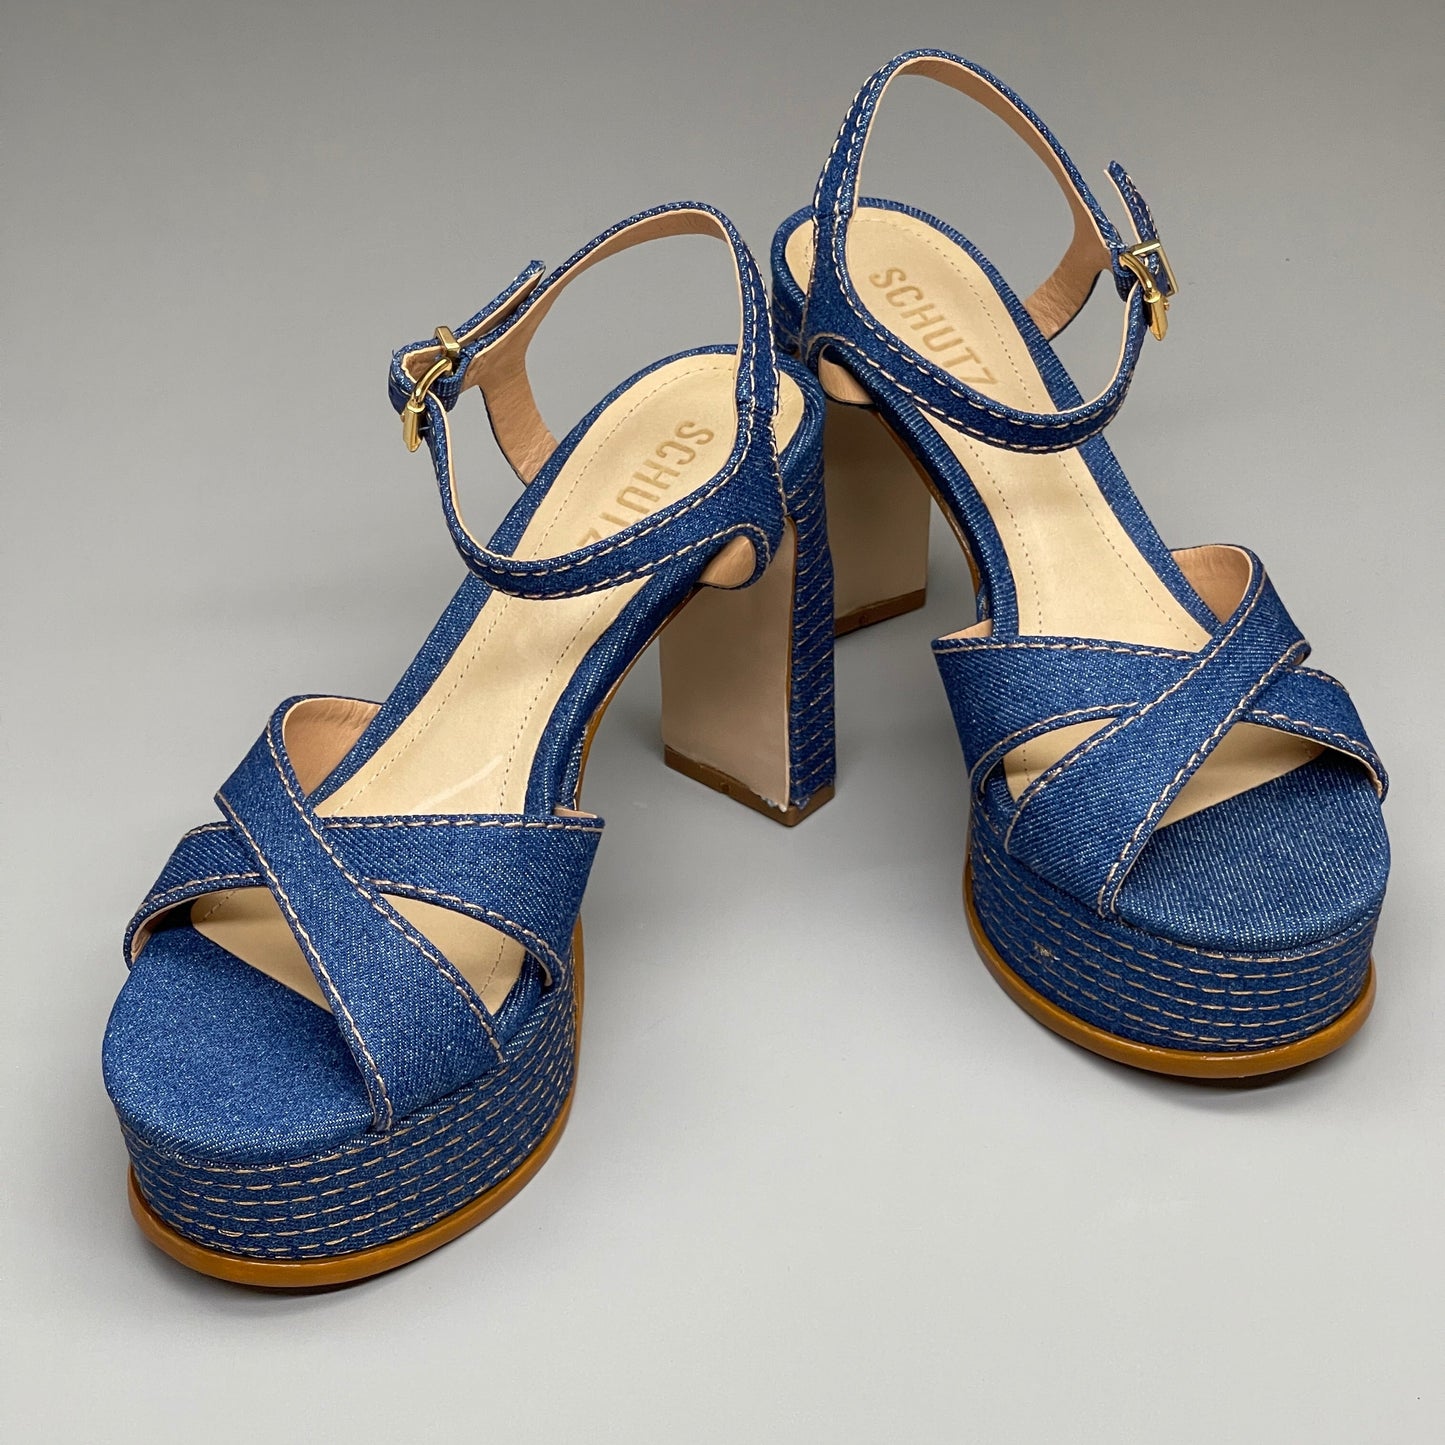 SCHUTZ Keefa Casual Denim Women's 4" Heeled Sandal Platform Blue Sz 5.5B (New)